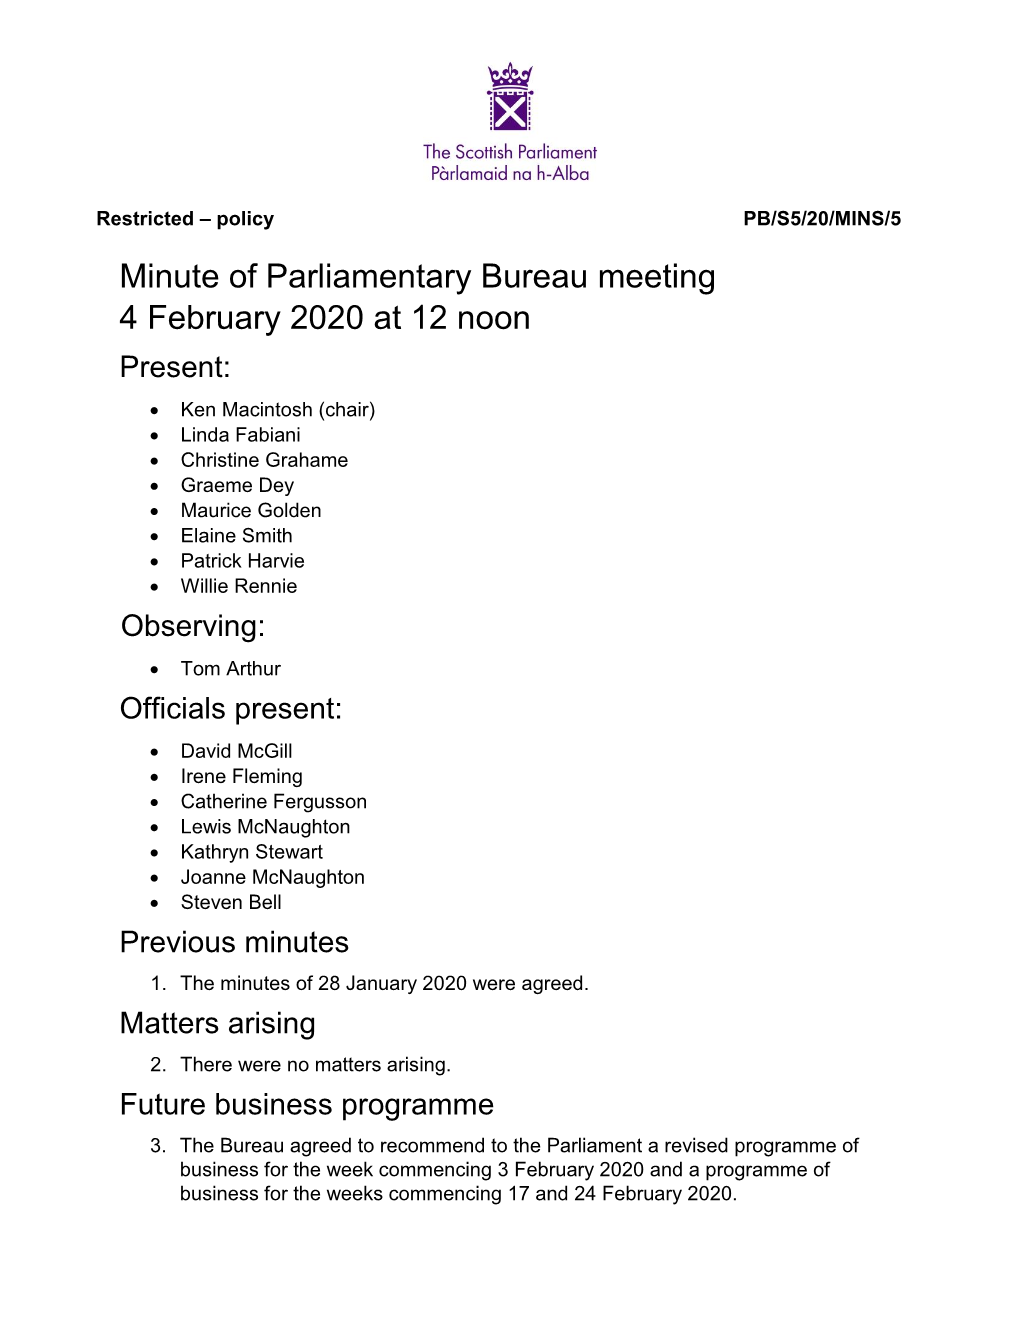 Minute of Parliamentary Bureau Meeting 4 February 2020 at 12 Noon